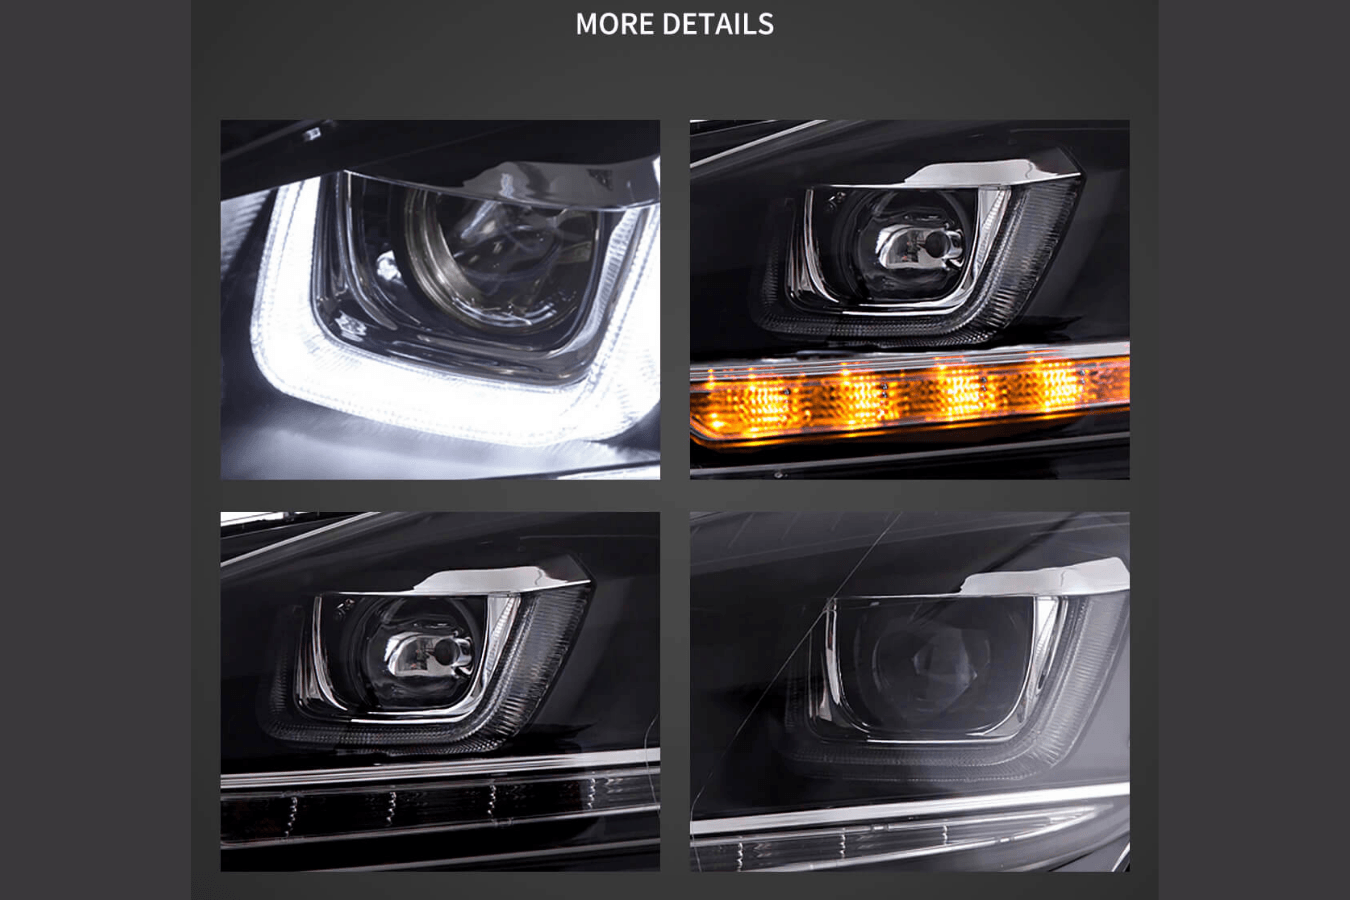 Volkswagen Golf 6 MK6 Black Demon Eyes Projector Headlight (2008 - 2014) - K2 Industries